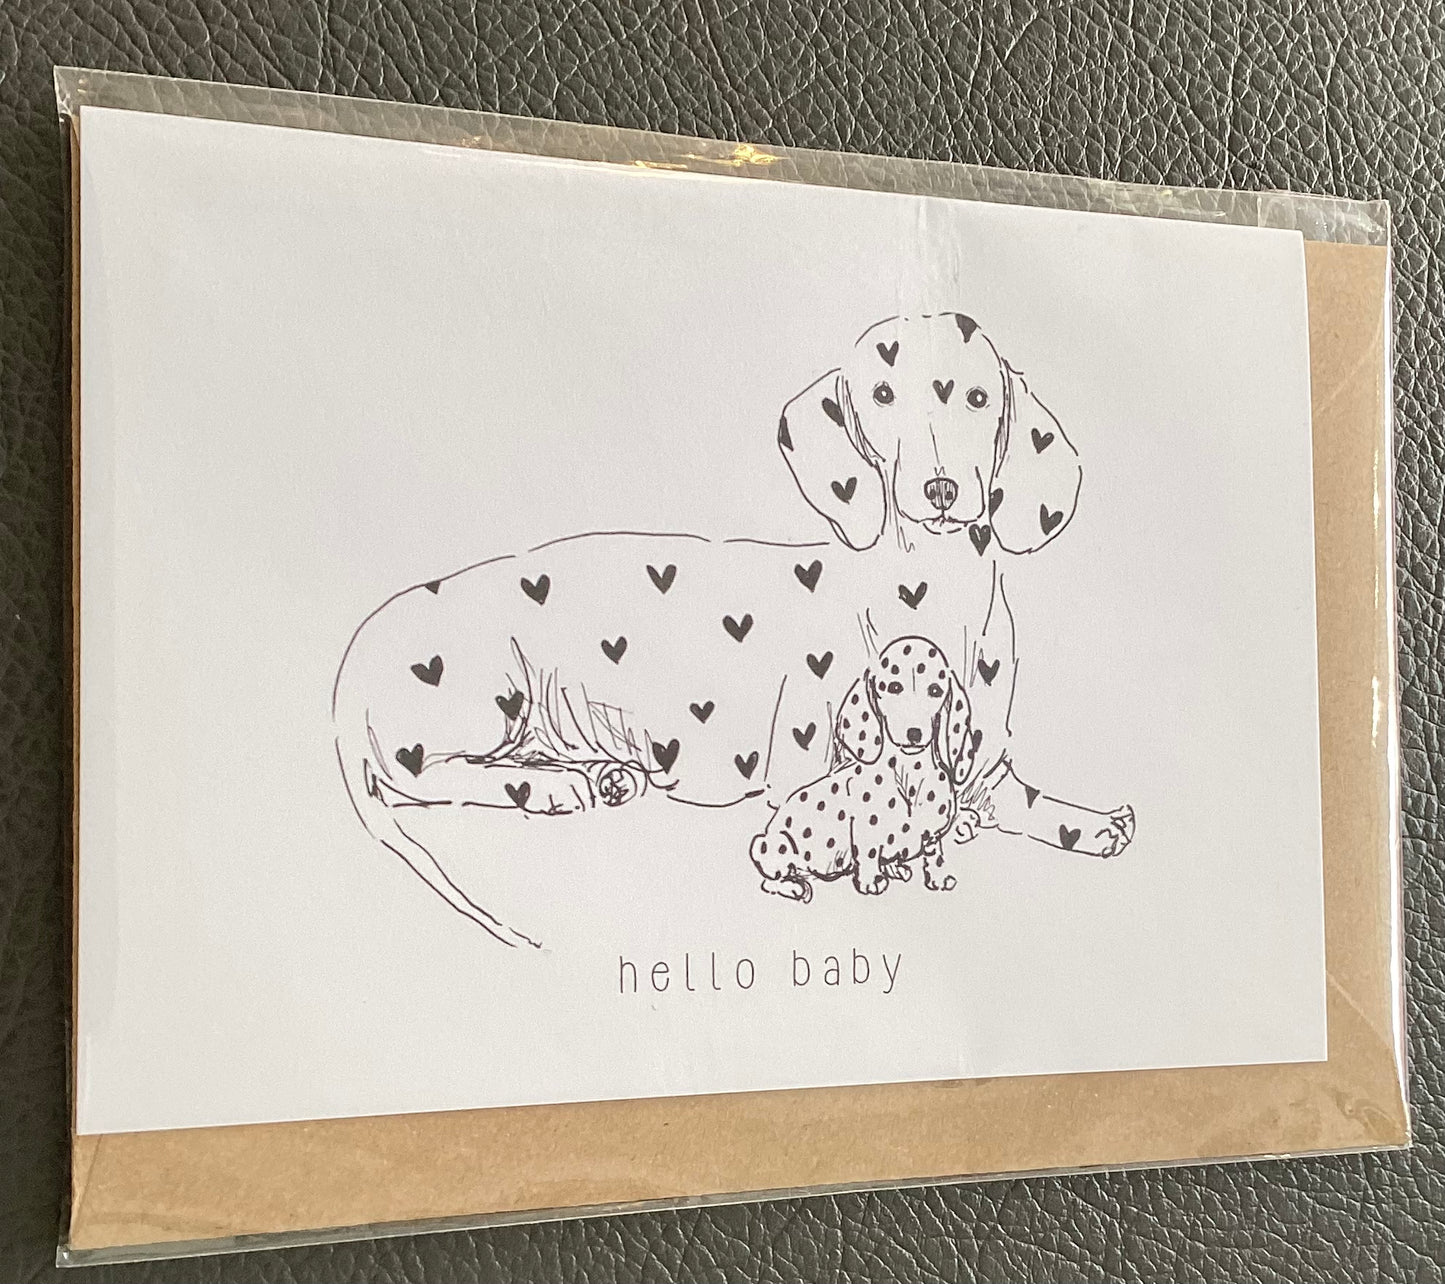 Tabitha Noakes ‘Hello Baby’ A6 Greeting Card